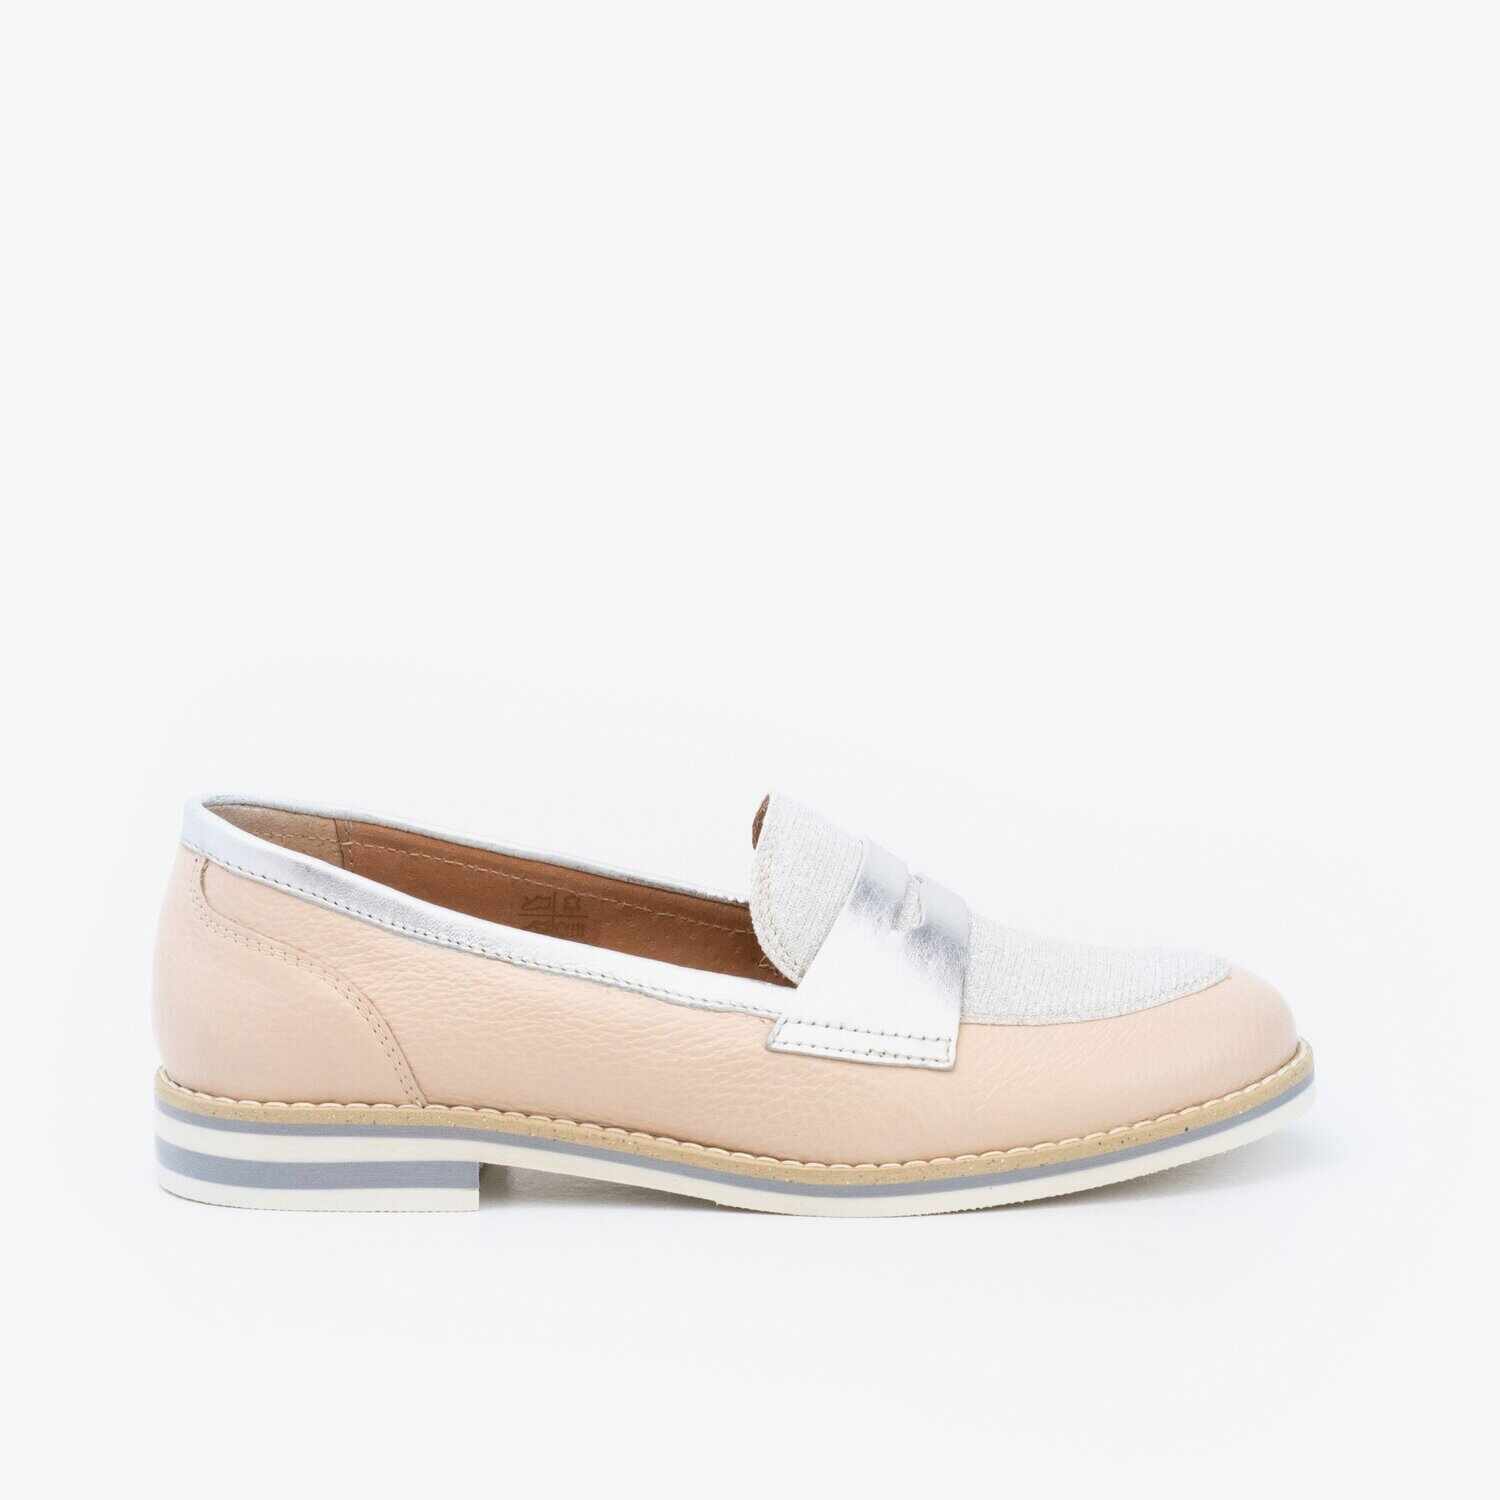 Pantofi dama casual din piele naturala - 031 Roz argintiu box